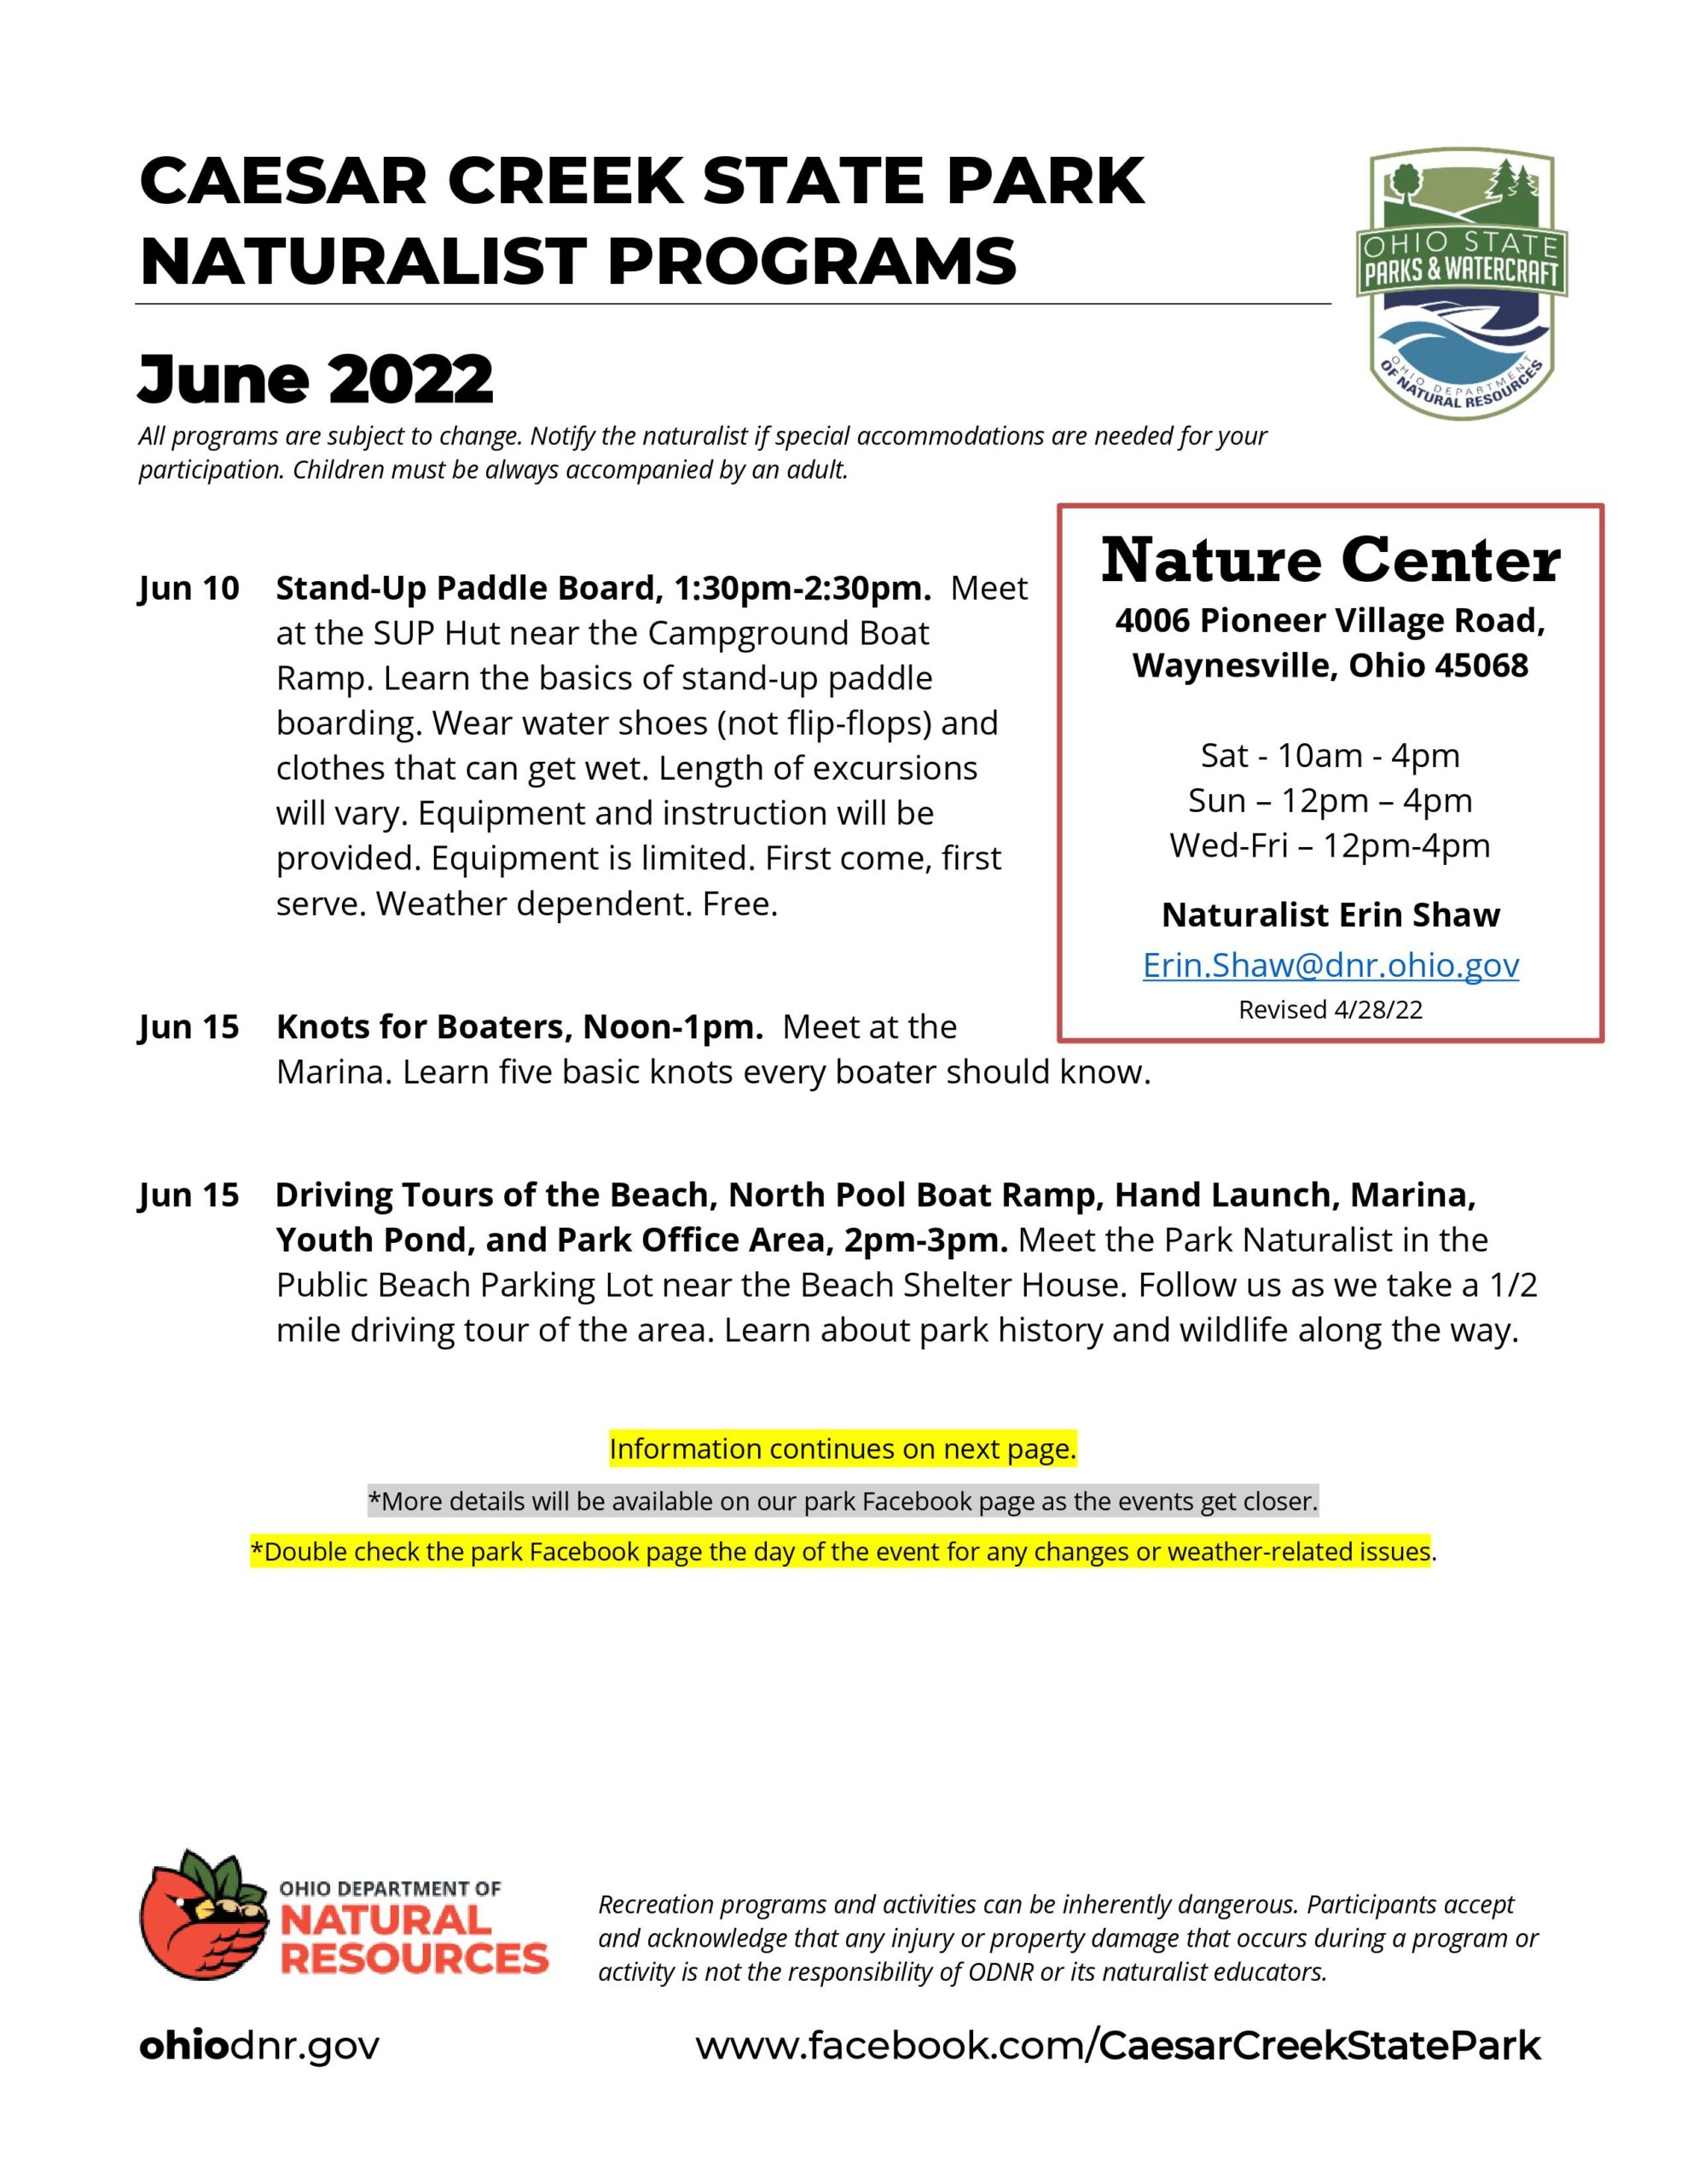 June 2022 Programs3